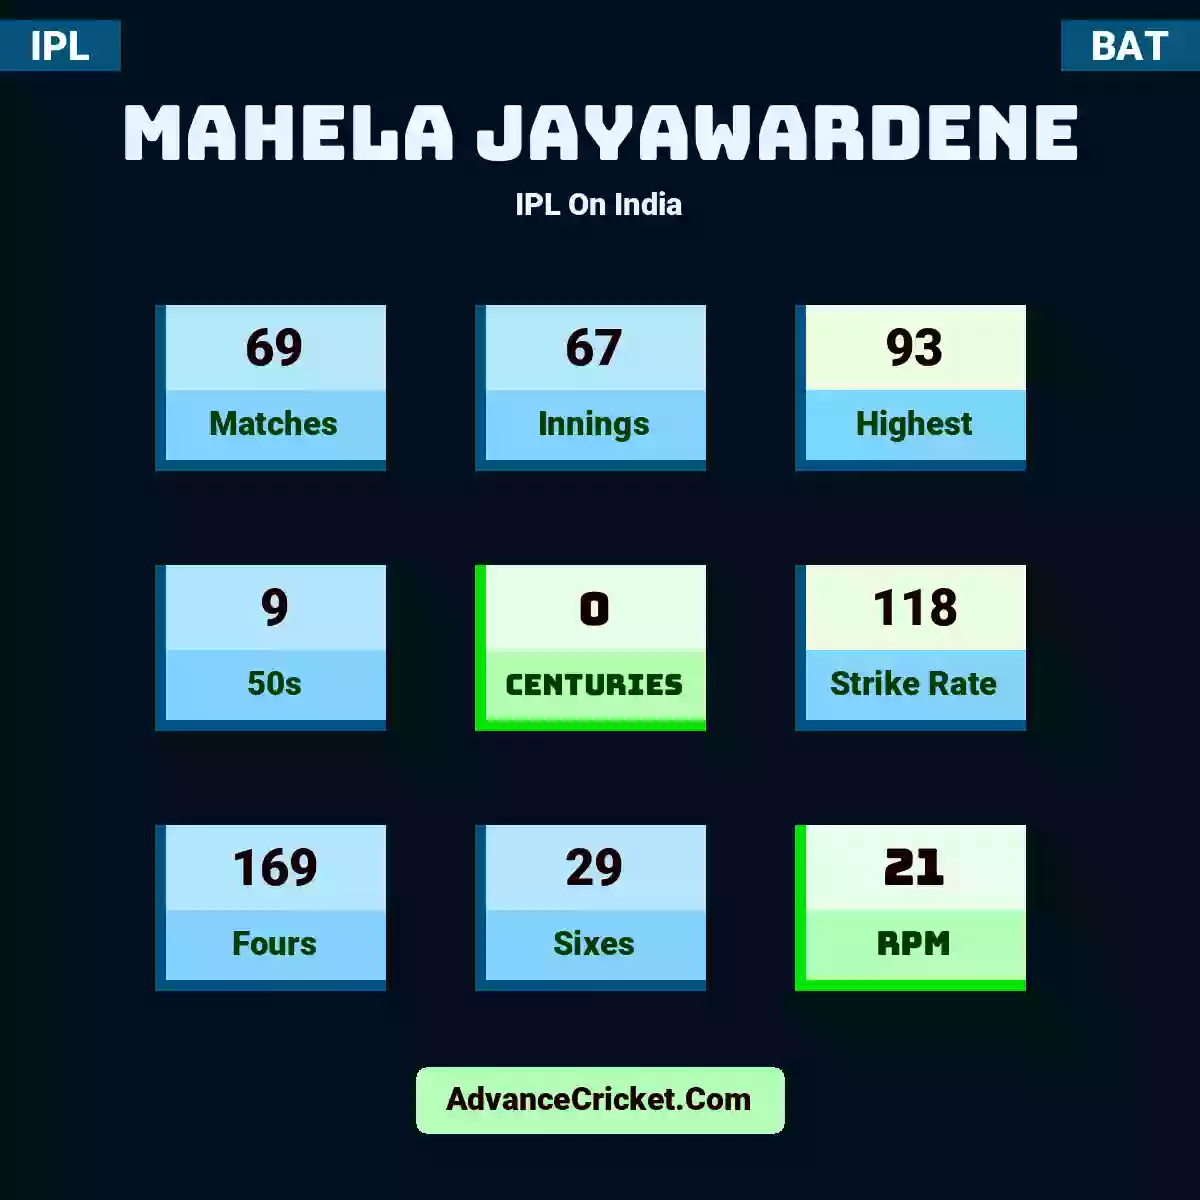 Mahela Jayawardene IPL  On India, Mahela Jayawardene played 69 matches, scored 93 runs as highest, 9 half-centuries, and 0 centuries, with a strike rate of 118. M.Jayawardene hit 169 fours and 29 sixes, with an RPM of 21.